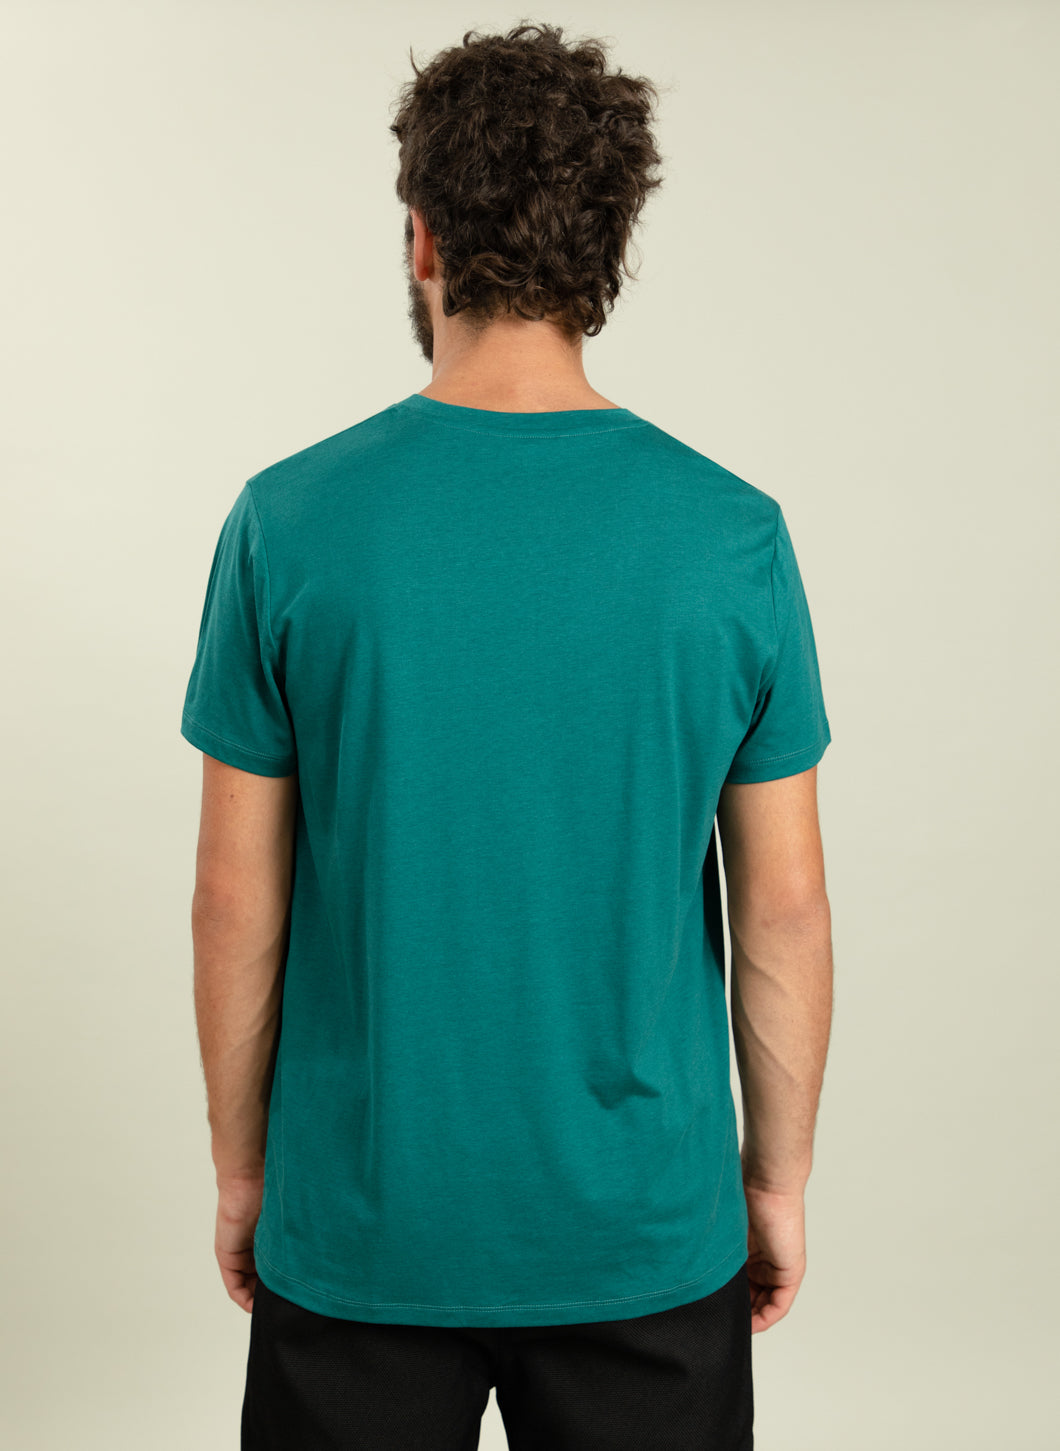 Short Sleeve T-Shirt in Emerald Green Eucalyptus & Cotton